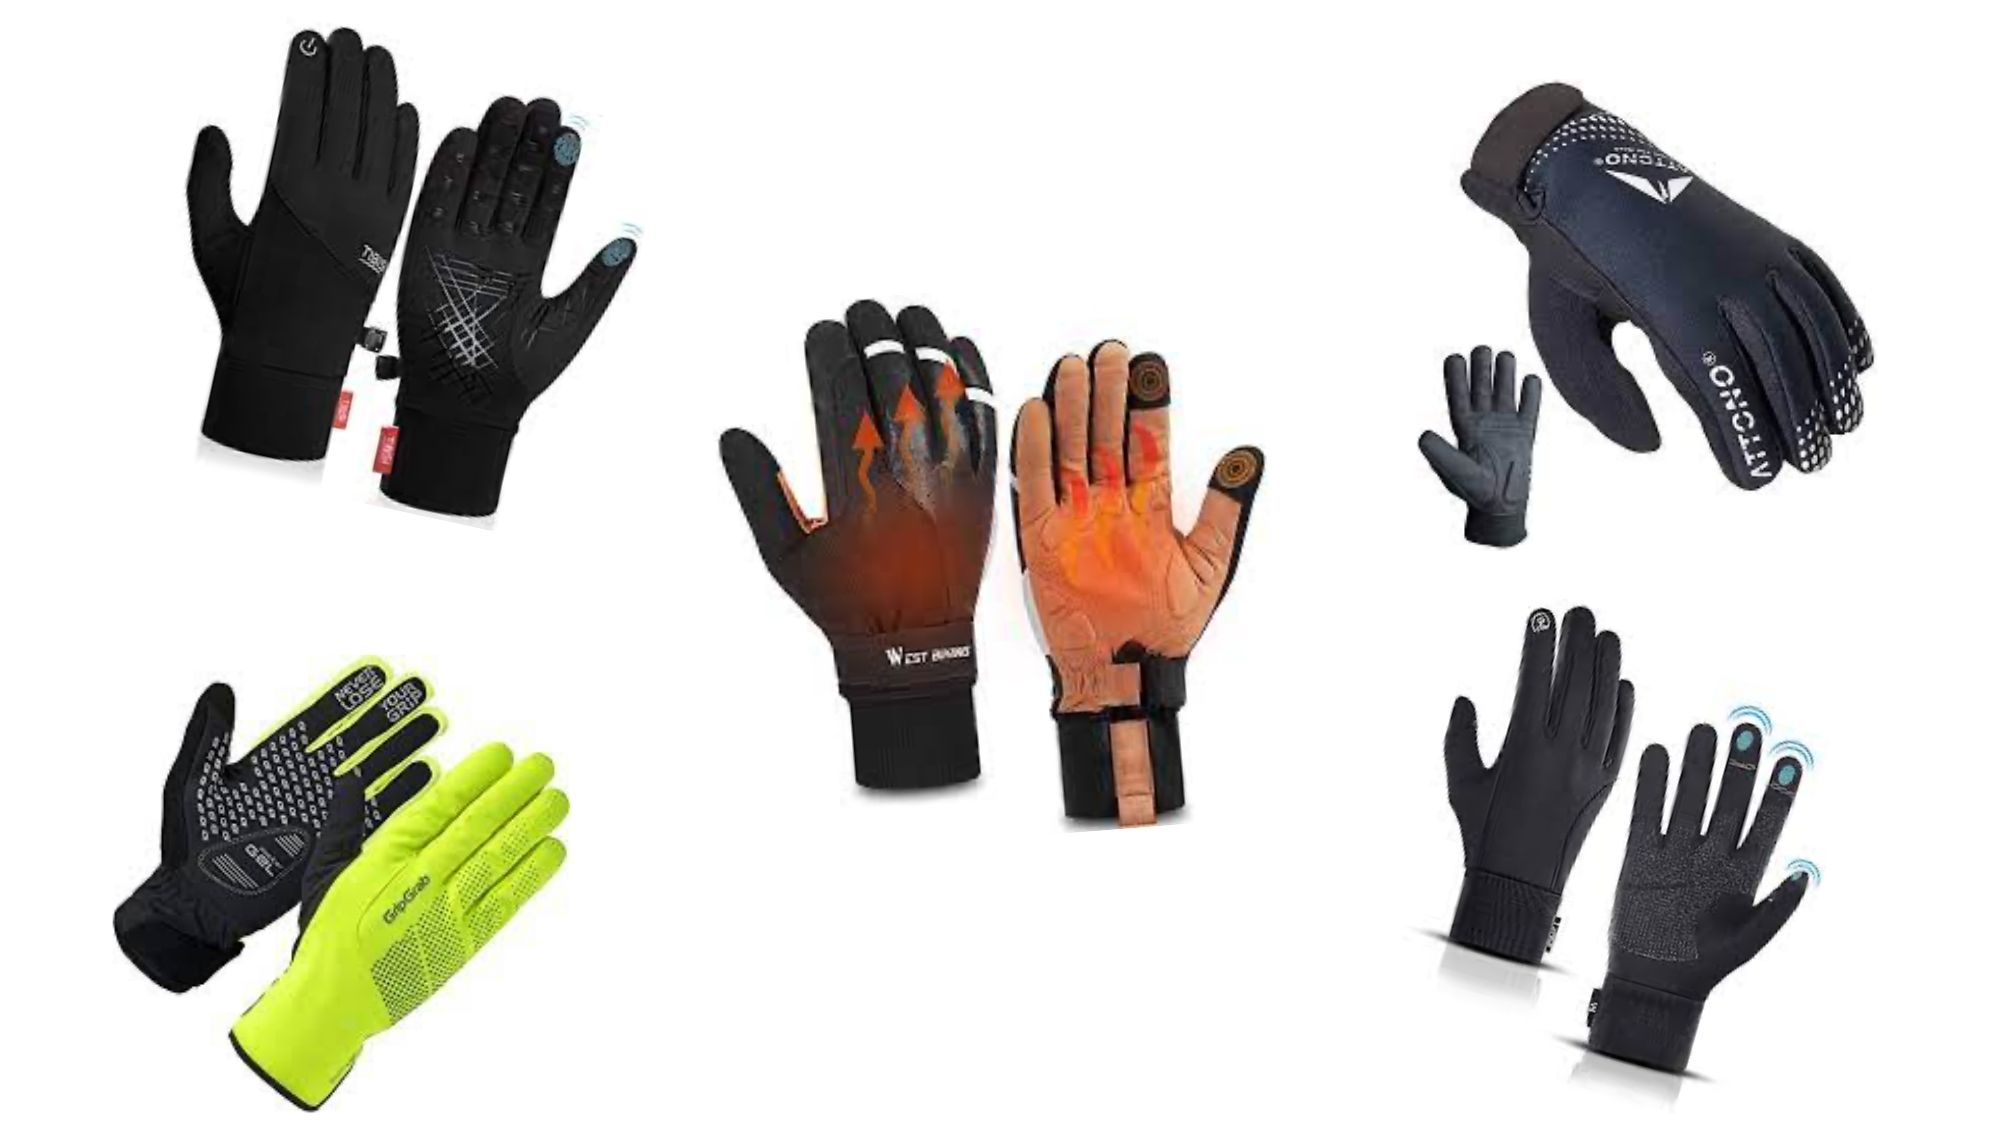 TRIWONDER Winterhandschuhe Herren Fahrradhandschuhe Handschuhe Touchscreen Sporthandschuhe Warme Anti-Rutsch Laufhandschuhe